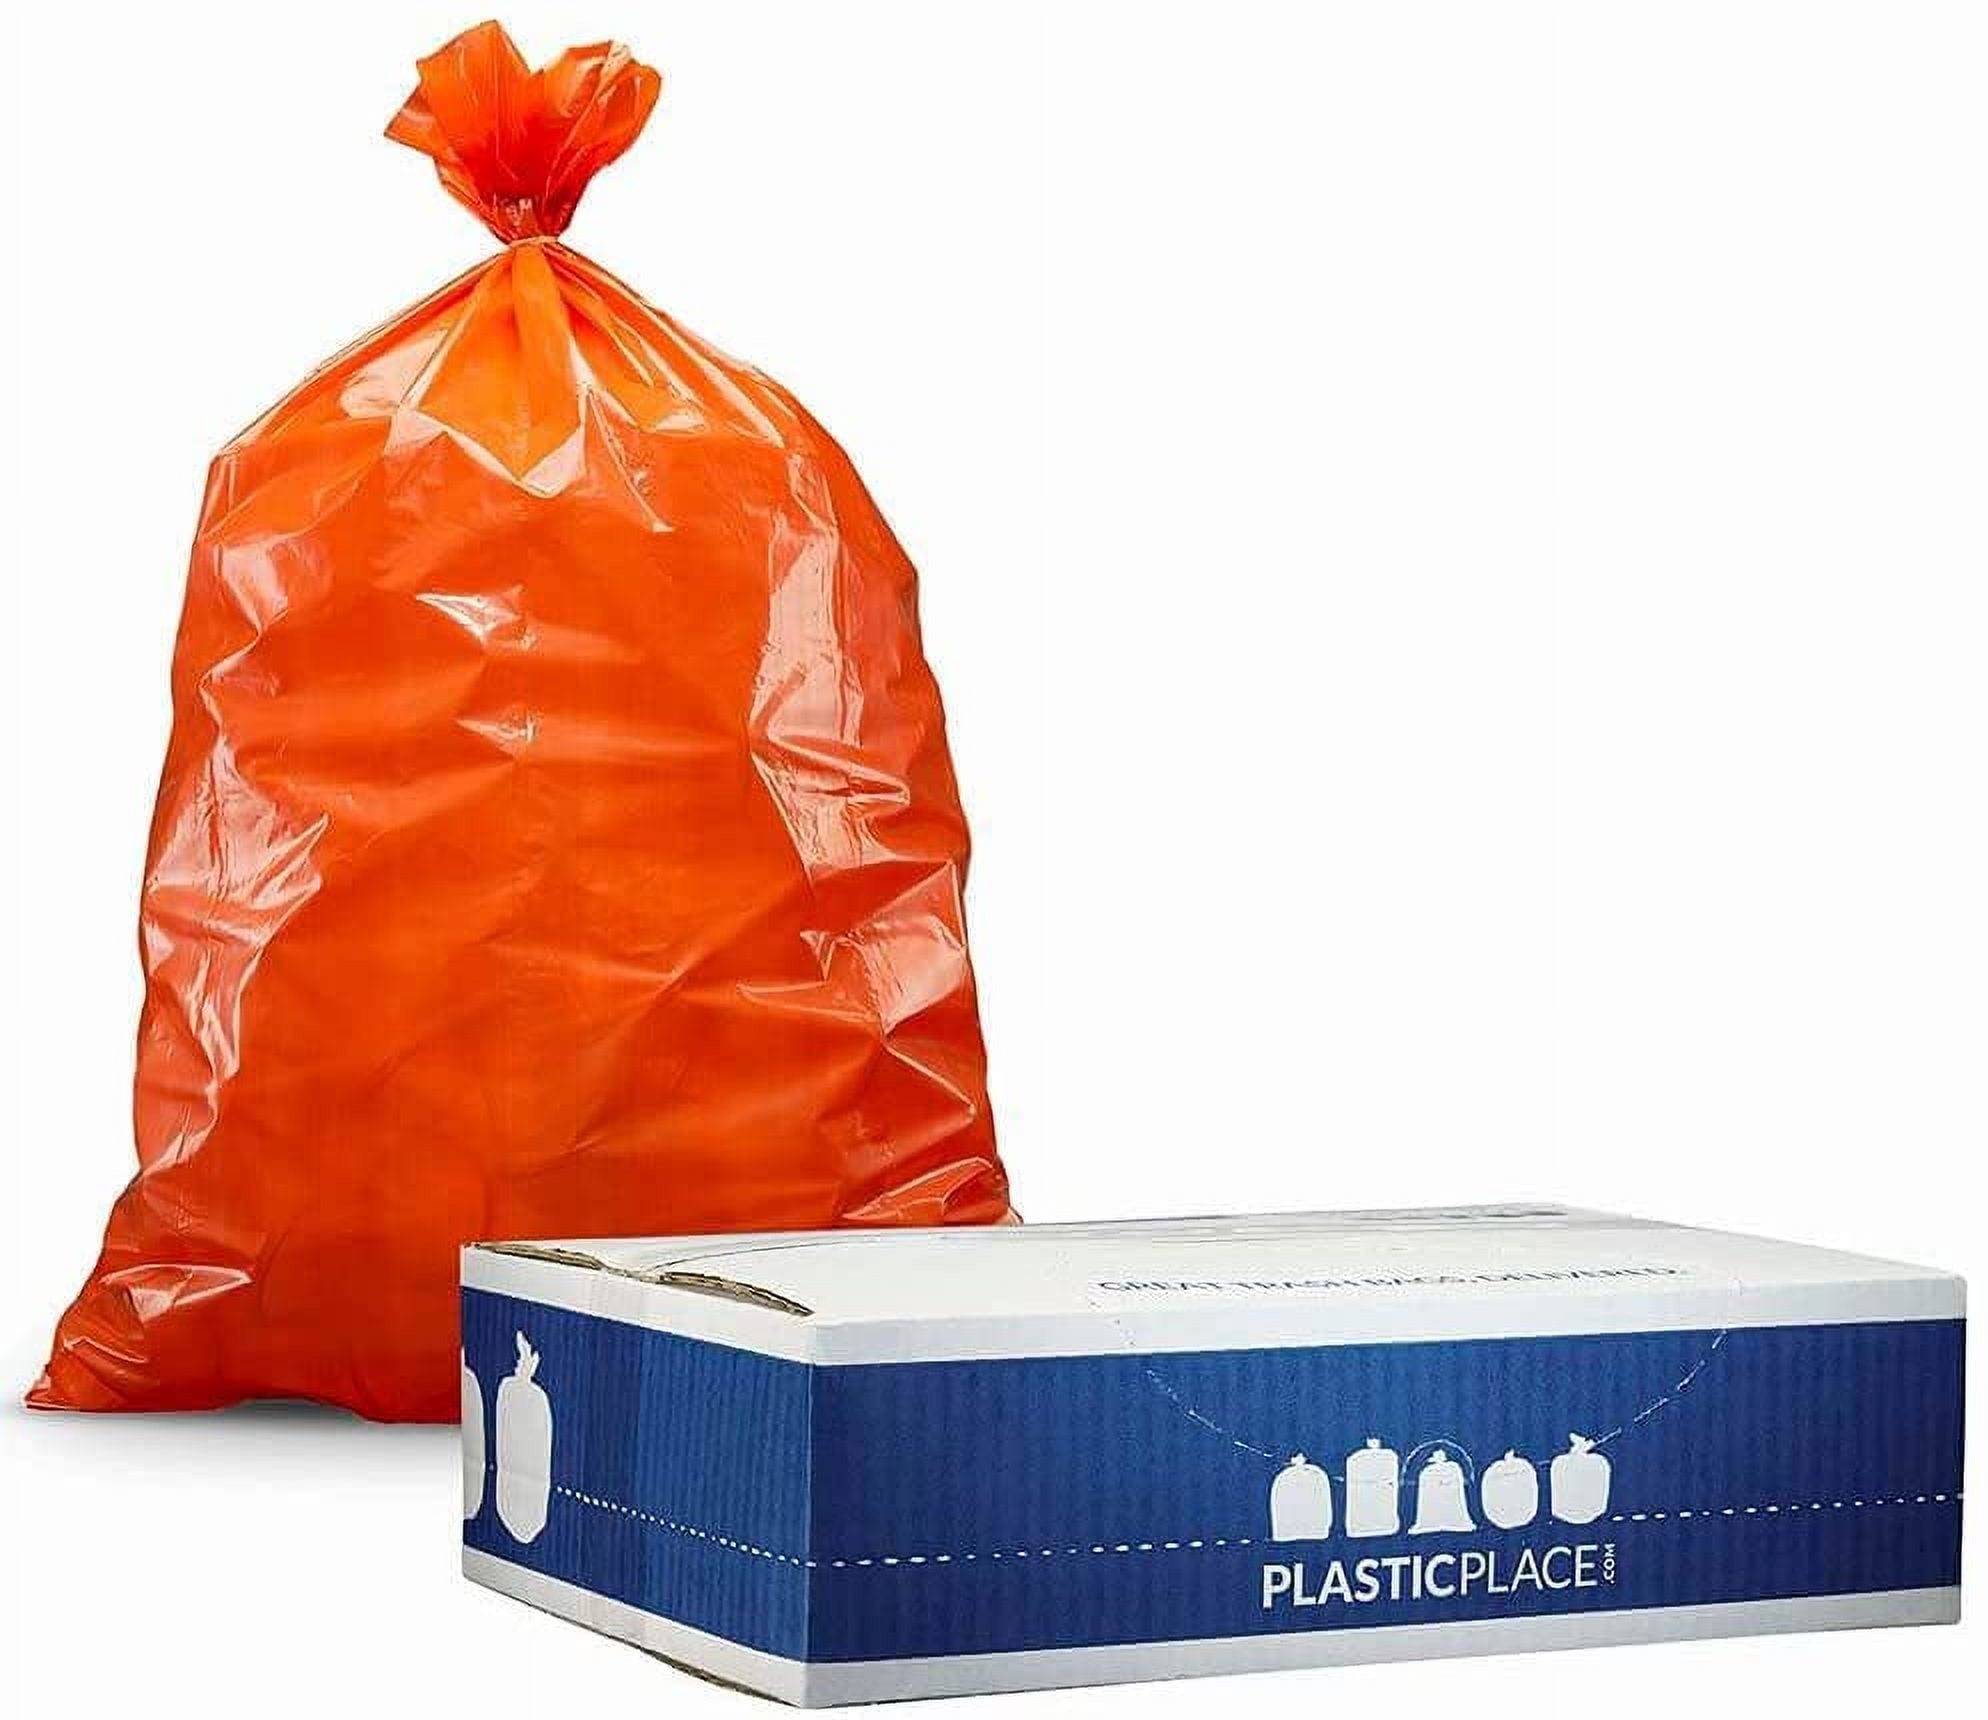 Plasticplace 33 Gallon Eco-friendly Trash Bags, Black, 1.5 Mil (100 Count)